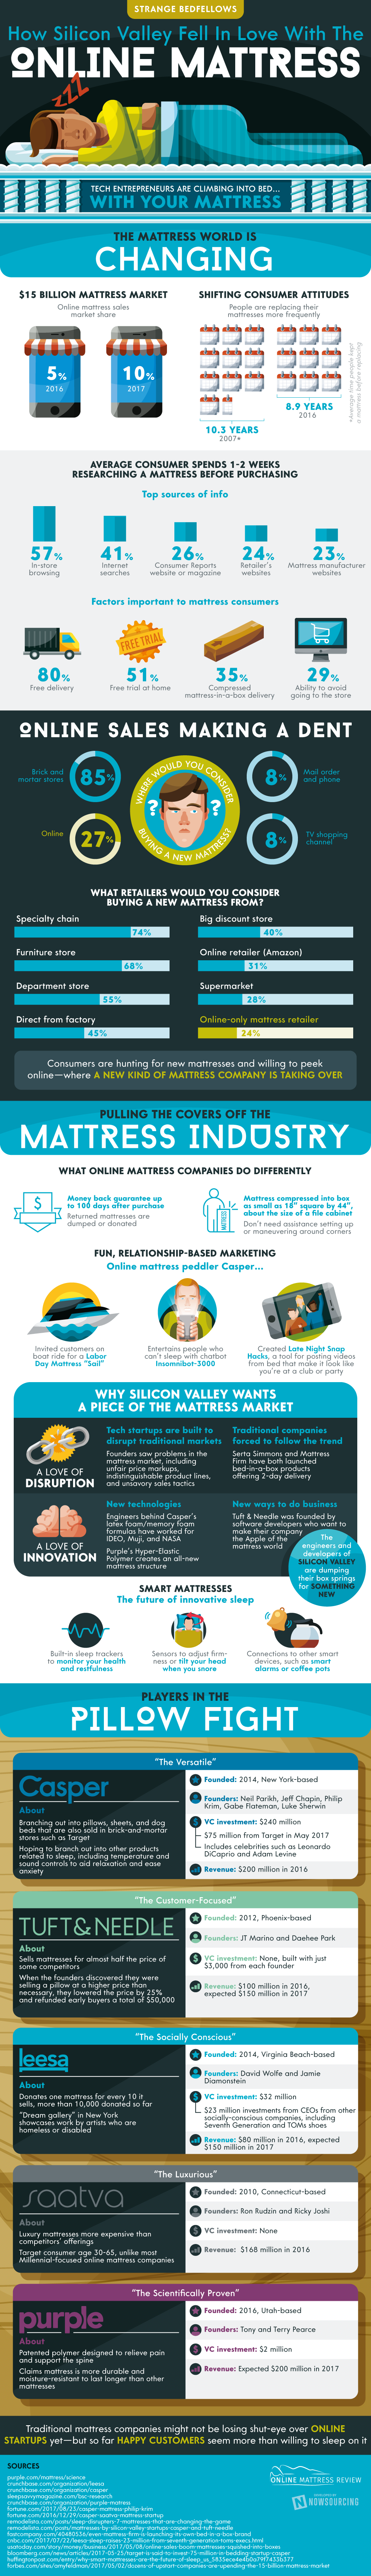 Why Tech is Targeting the $15 Billion Mattress Market